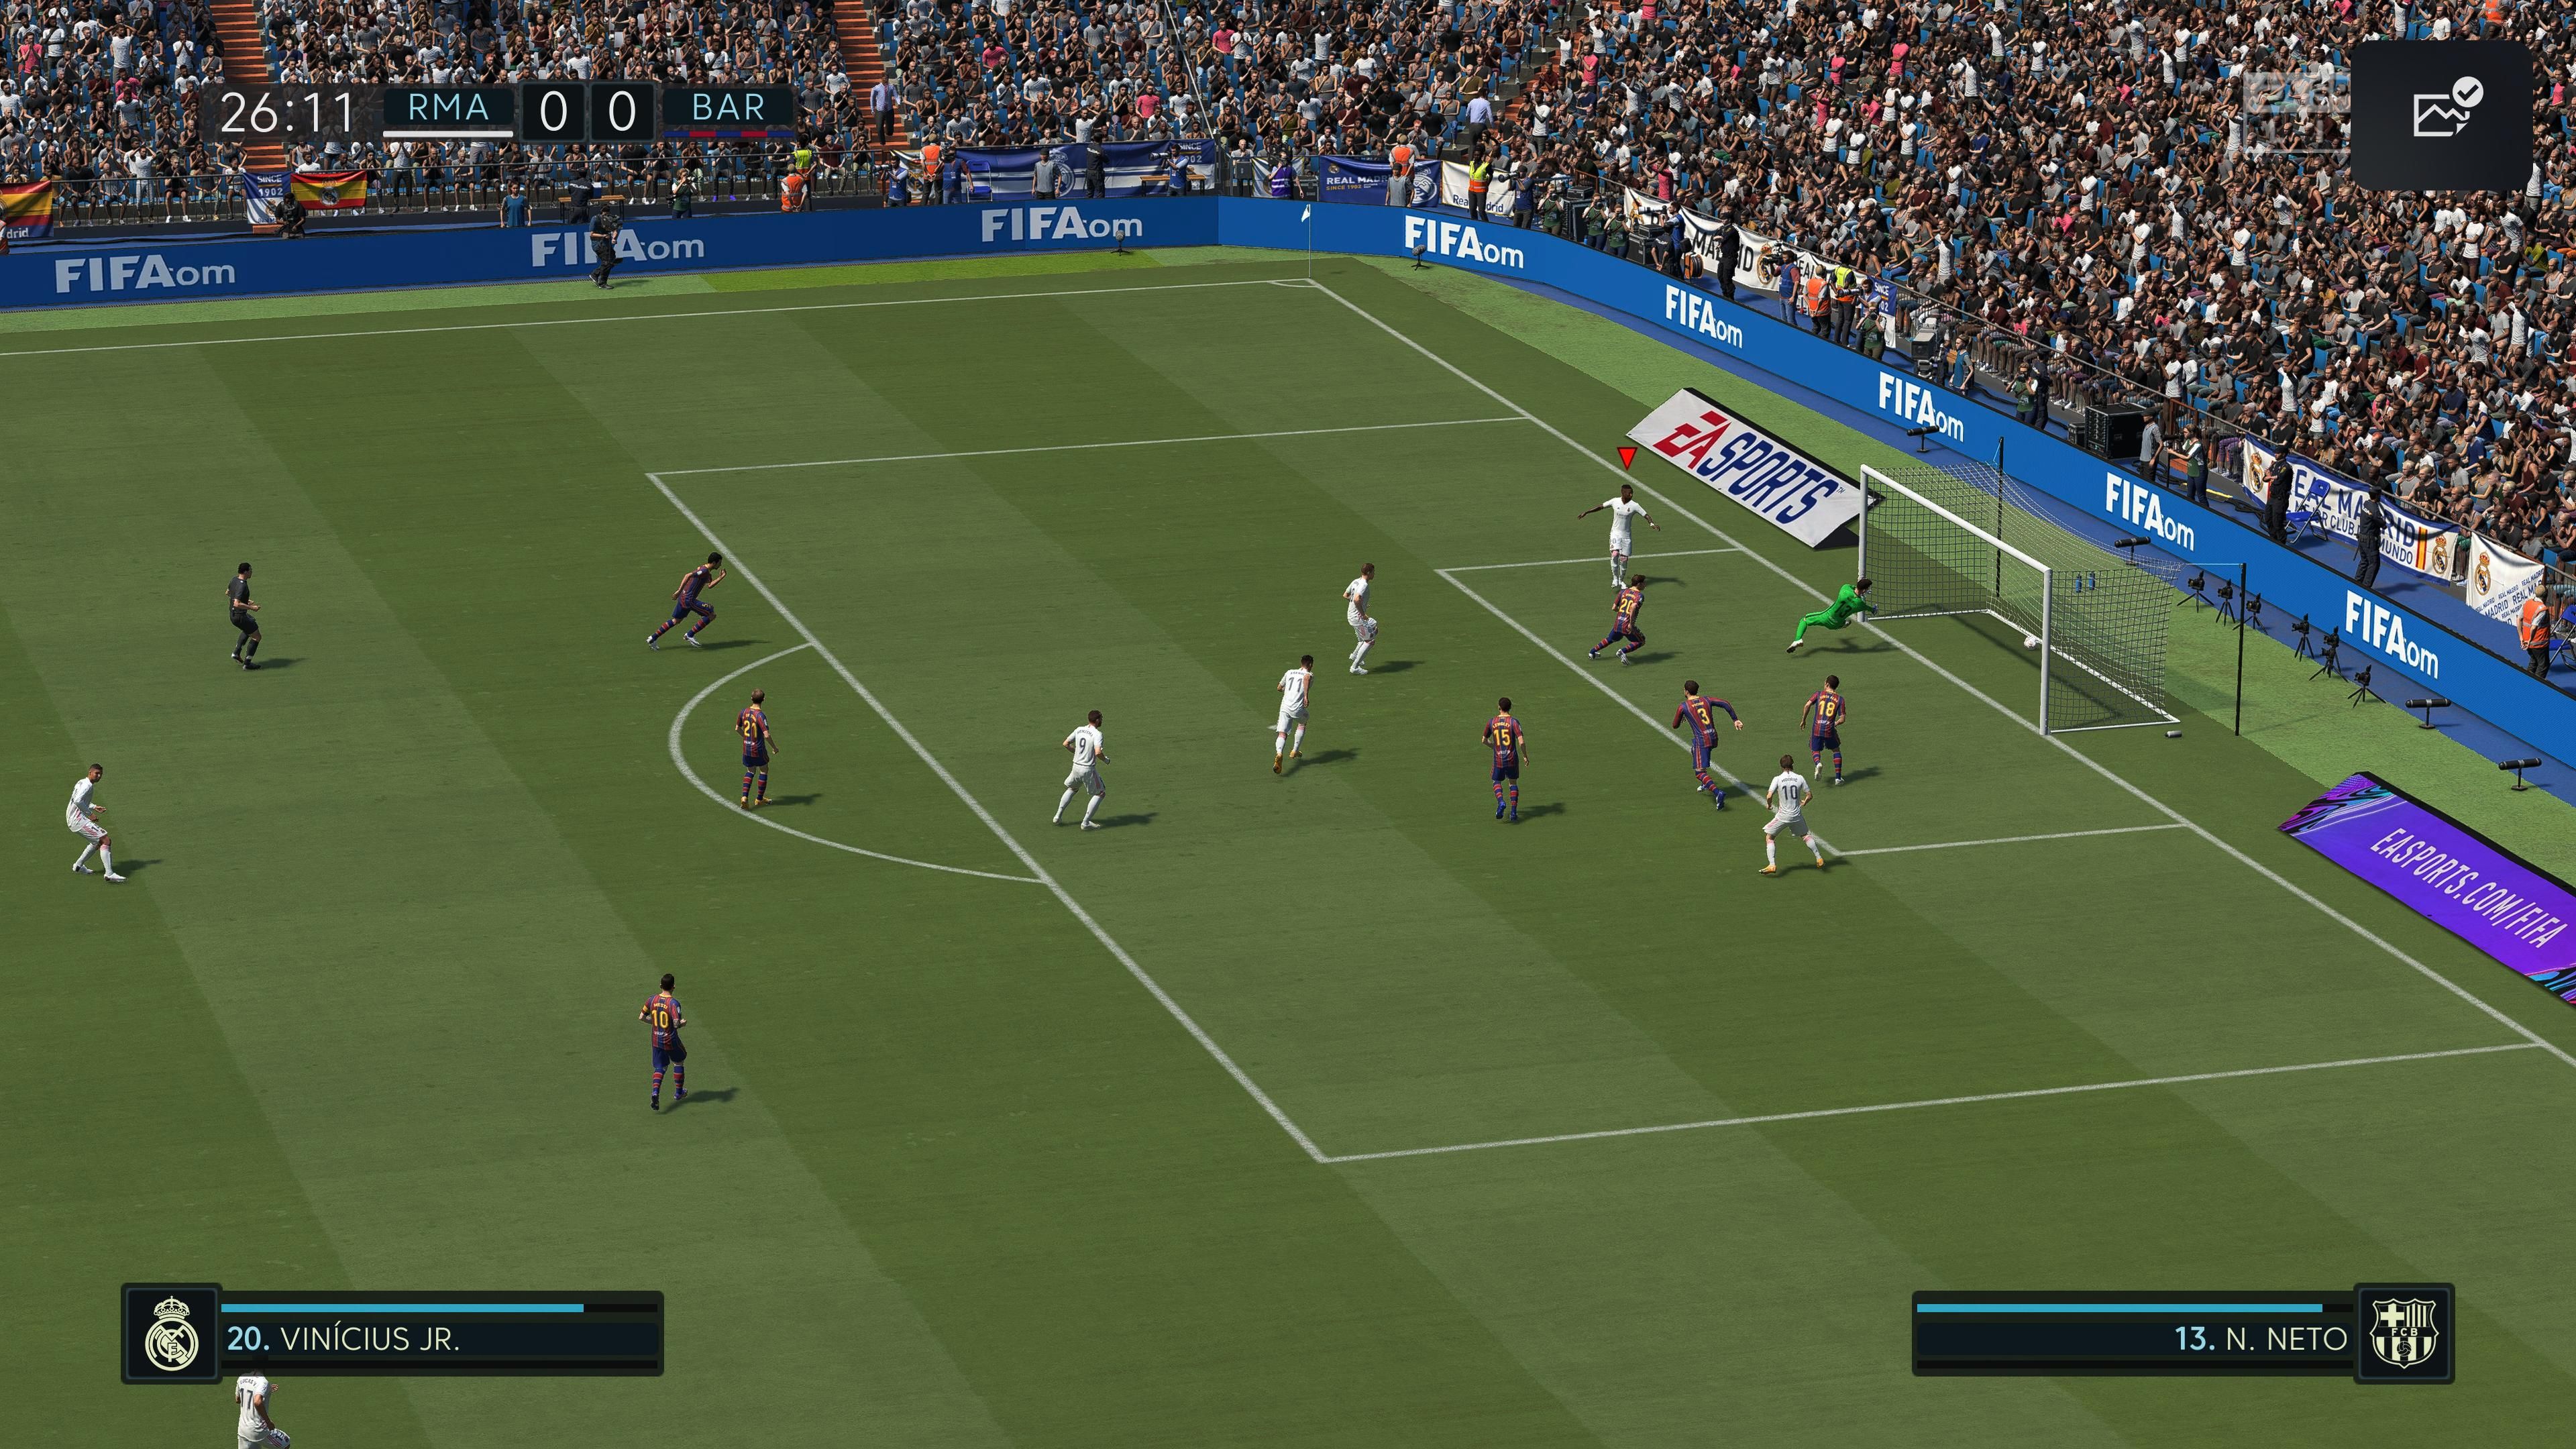 FIFA 21 Next Level Edition Electronic Arts PS5 Físico